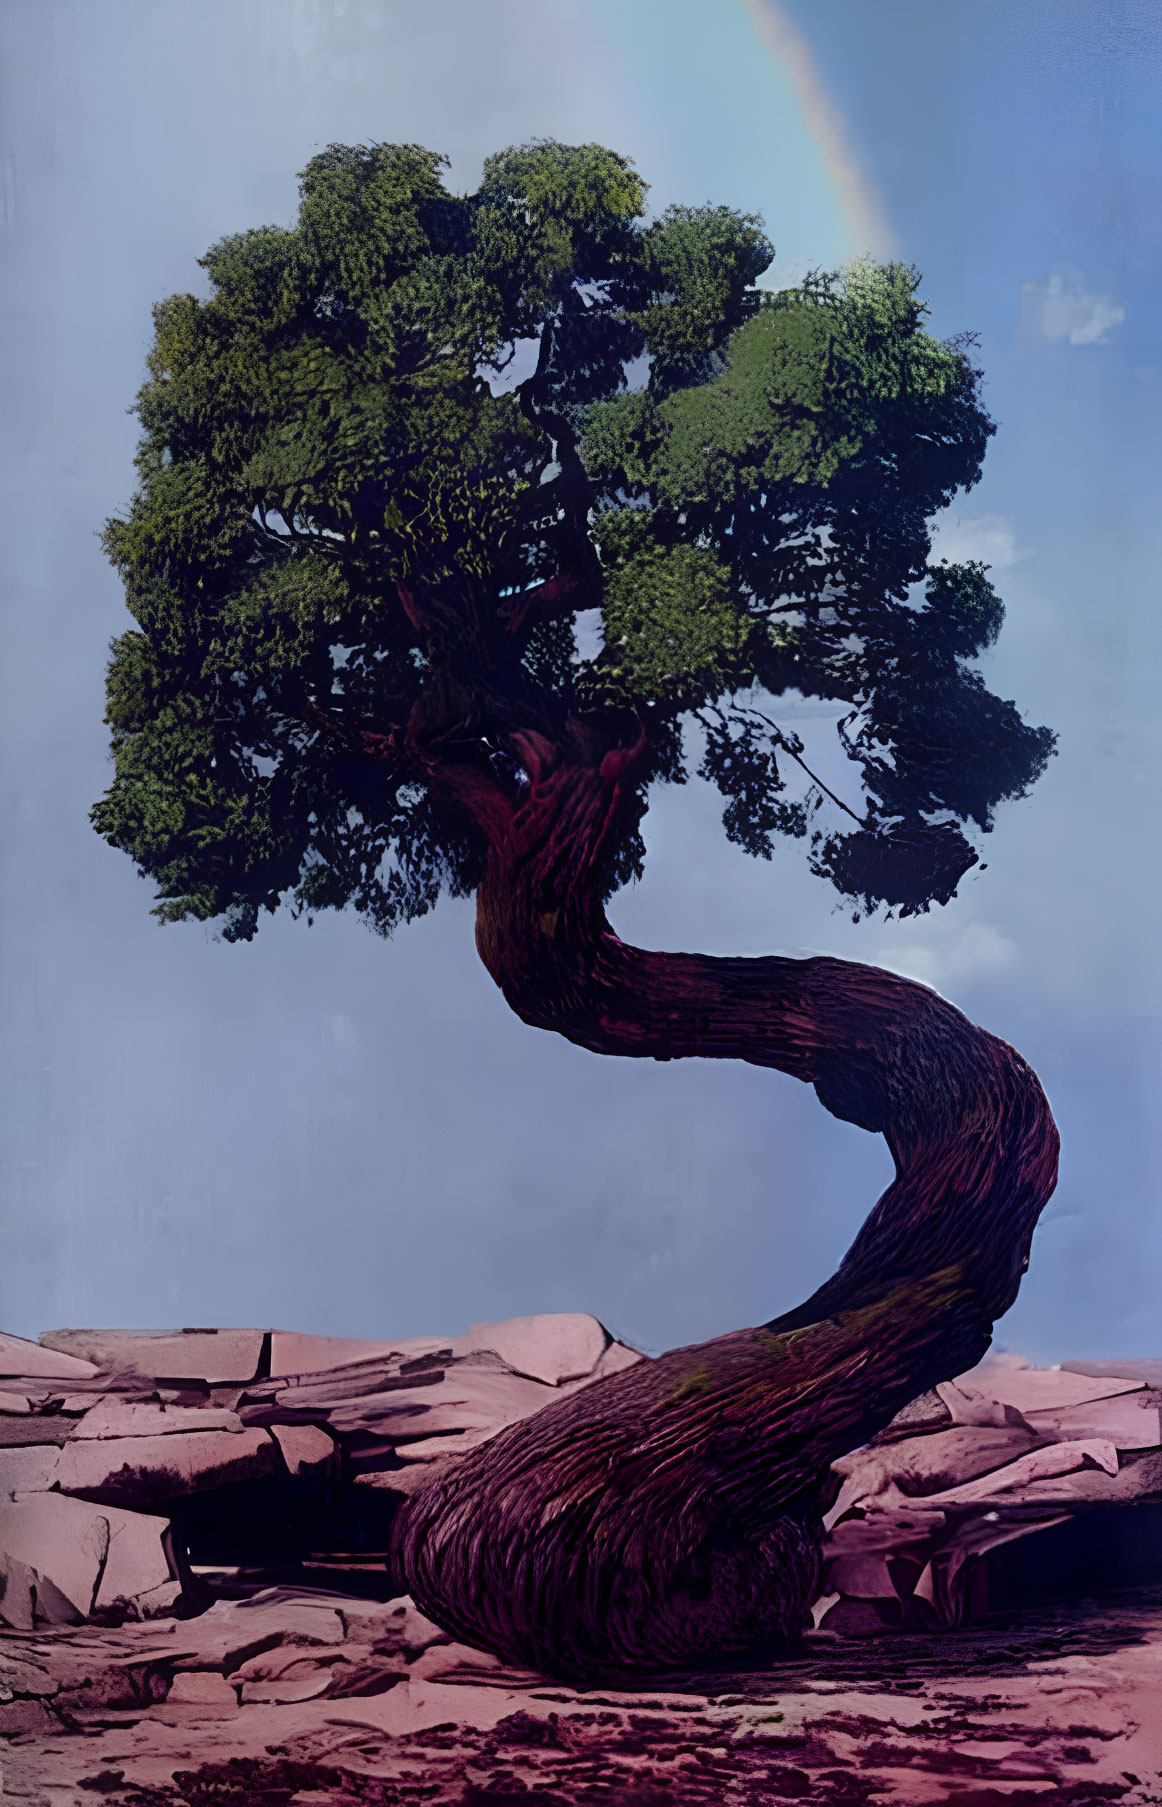 Digitally manipulated image: Twisted tree, green canopy, rainbow, rocky terrain, blue sky